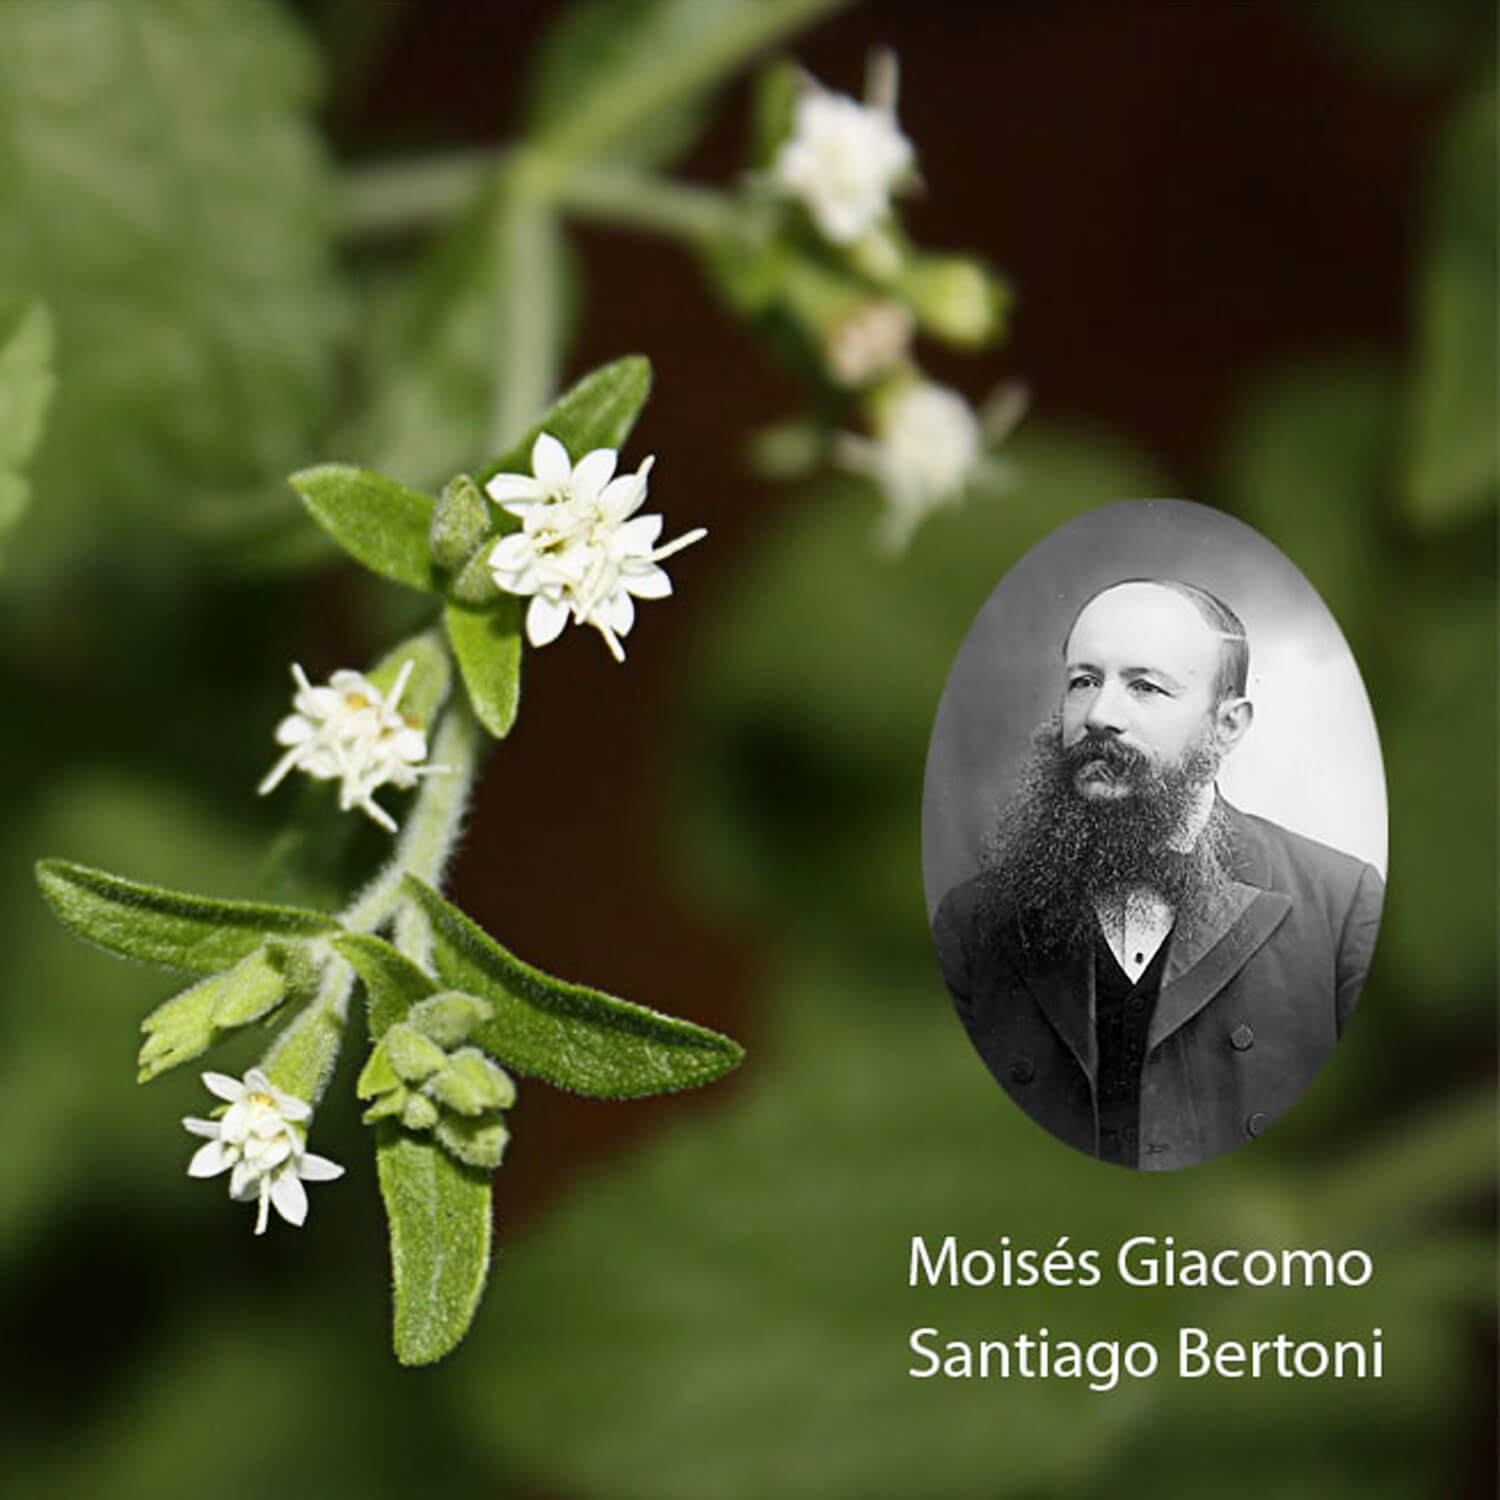 De botanicus Moises Bertoni is de ontdekker van de Steviaplant Stevia rebaudiana Steviapura